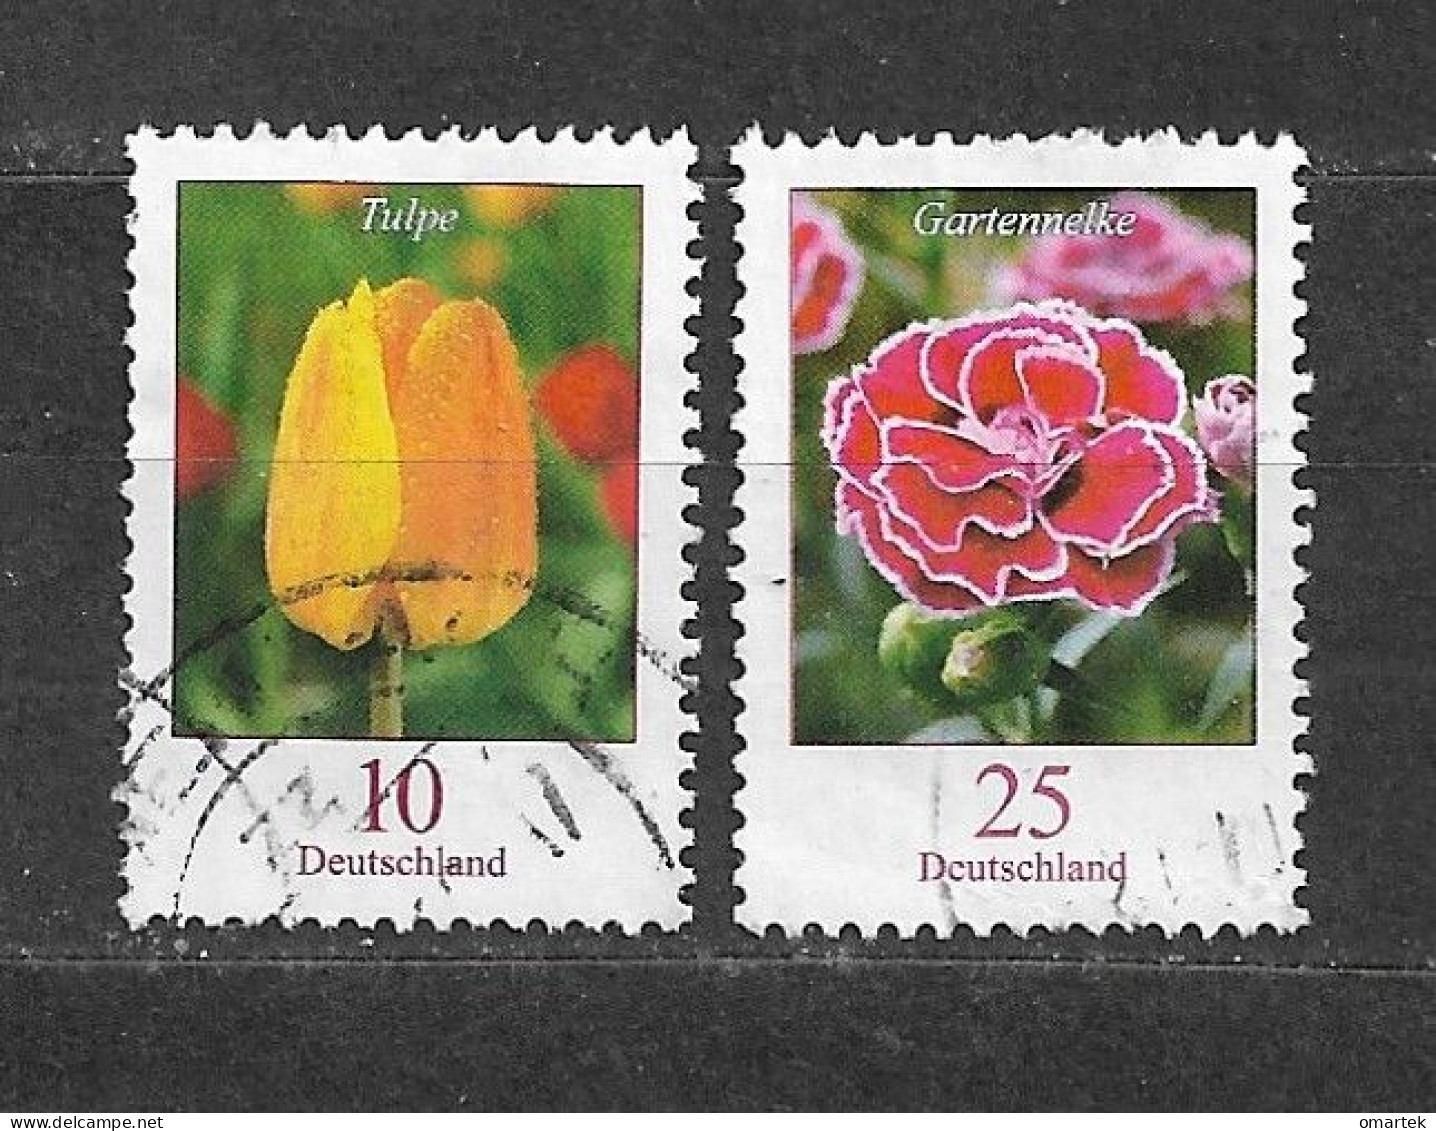 Deutschland Germany BRD 2005 ⊙ Mi 2462, 2484 Tulpe, Gartennelke - Oblitérés